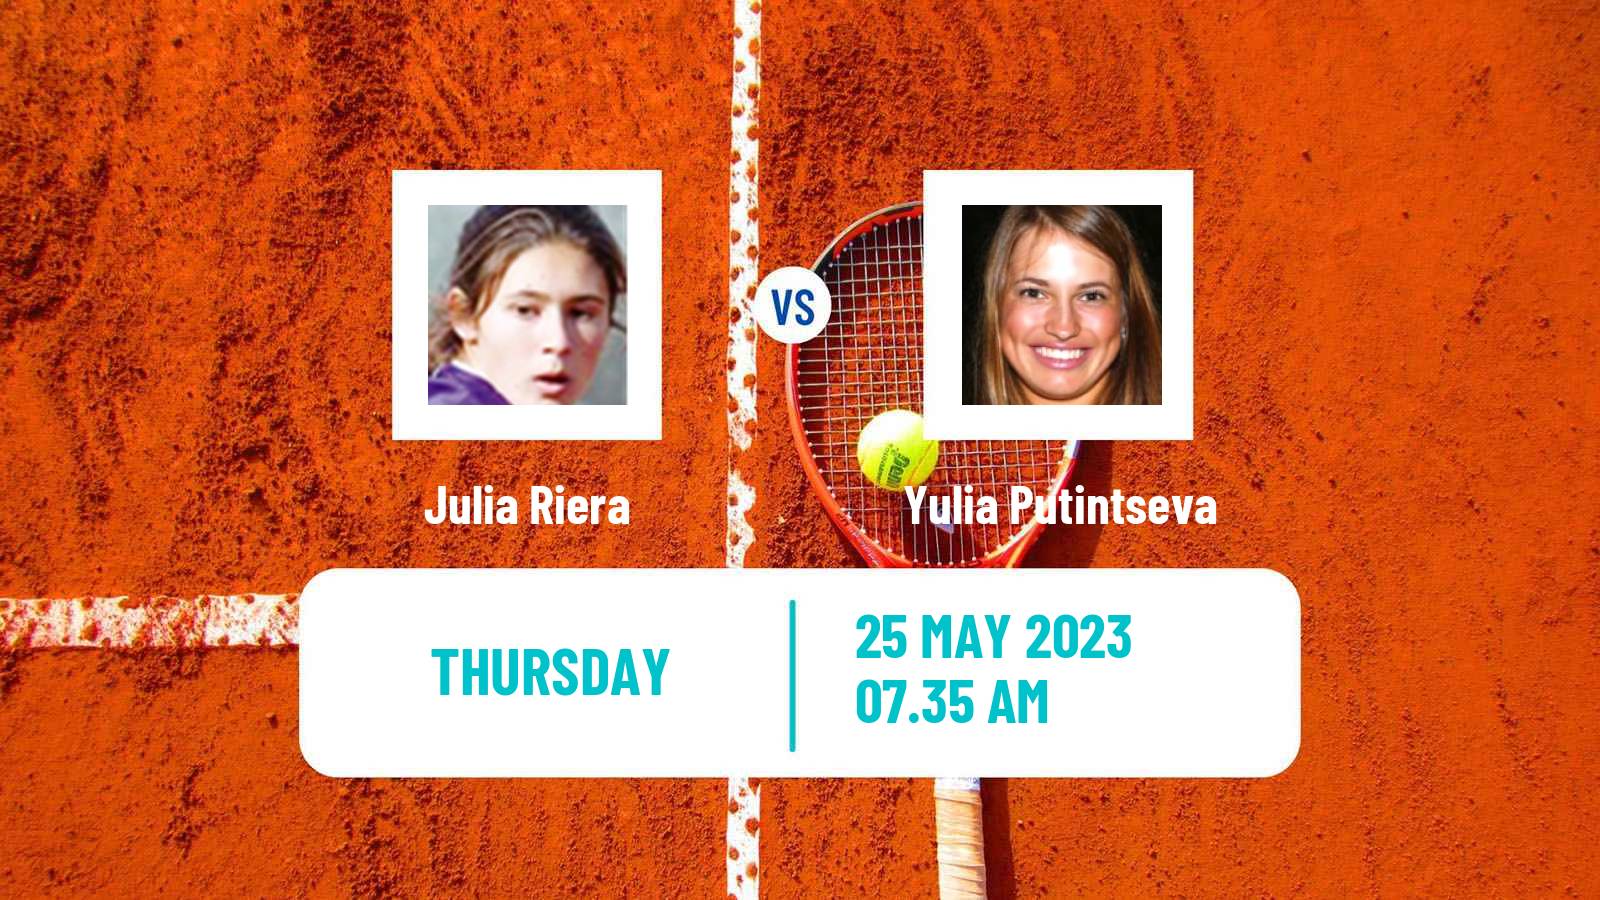 Tennis WTA Rabat Julia Riera - Yulia Putintseva